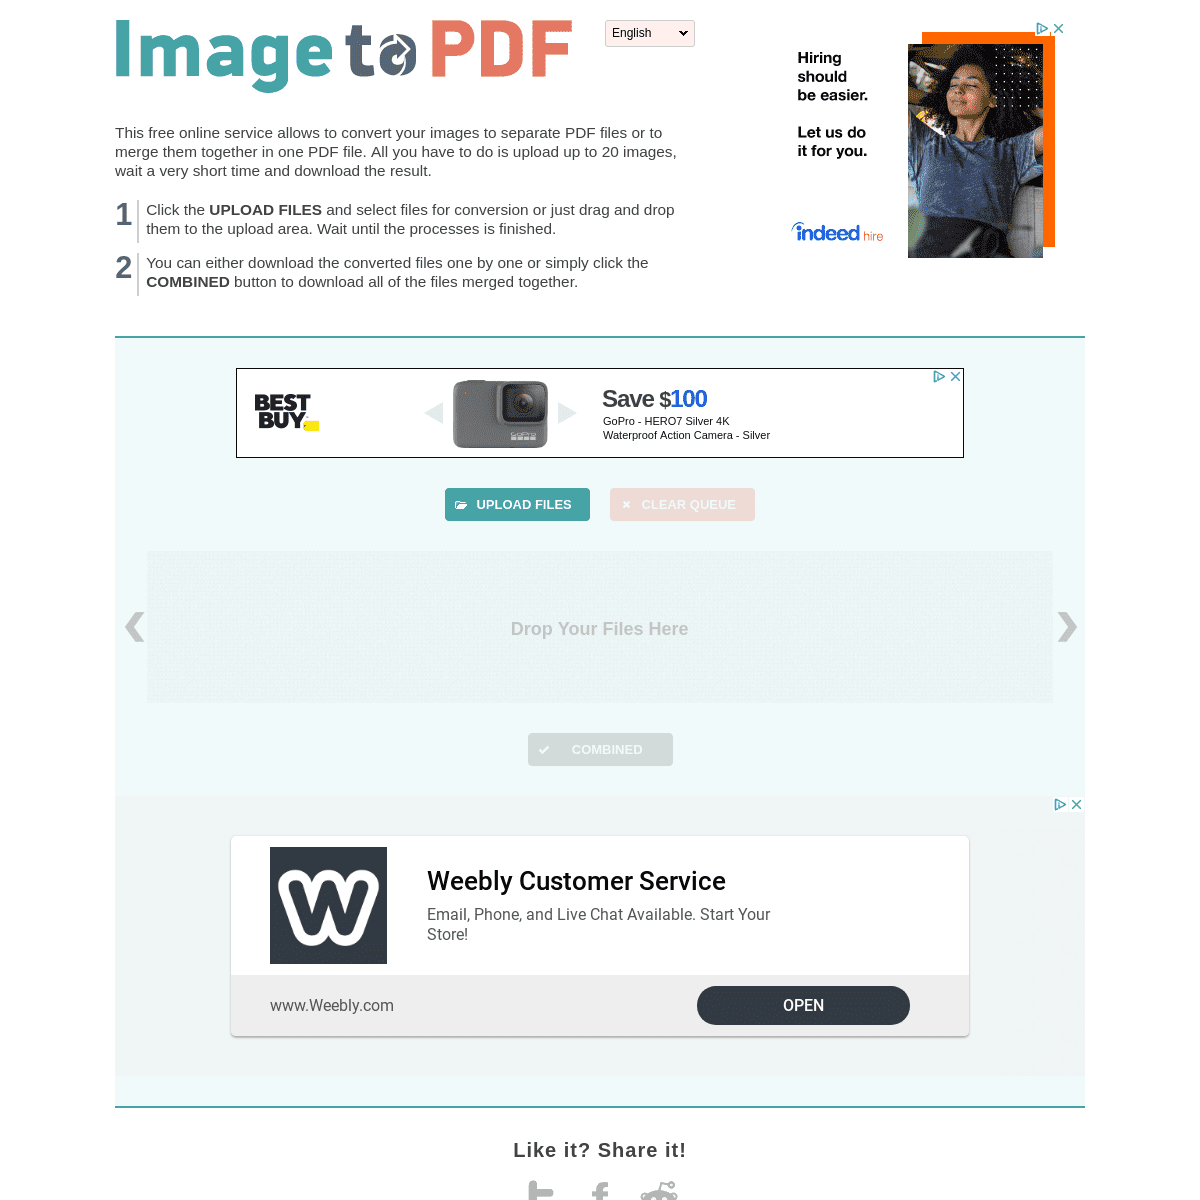 A complete backup of imagetopdf.com